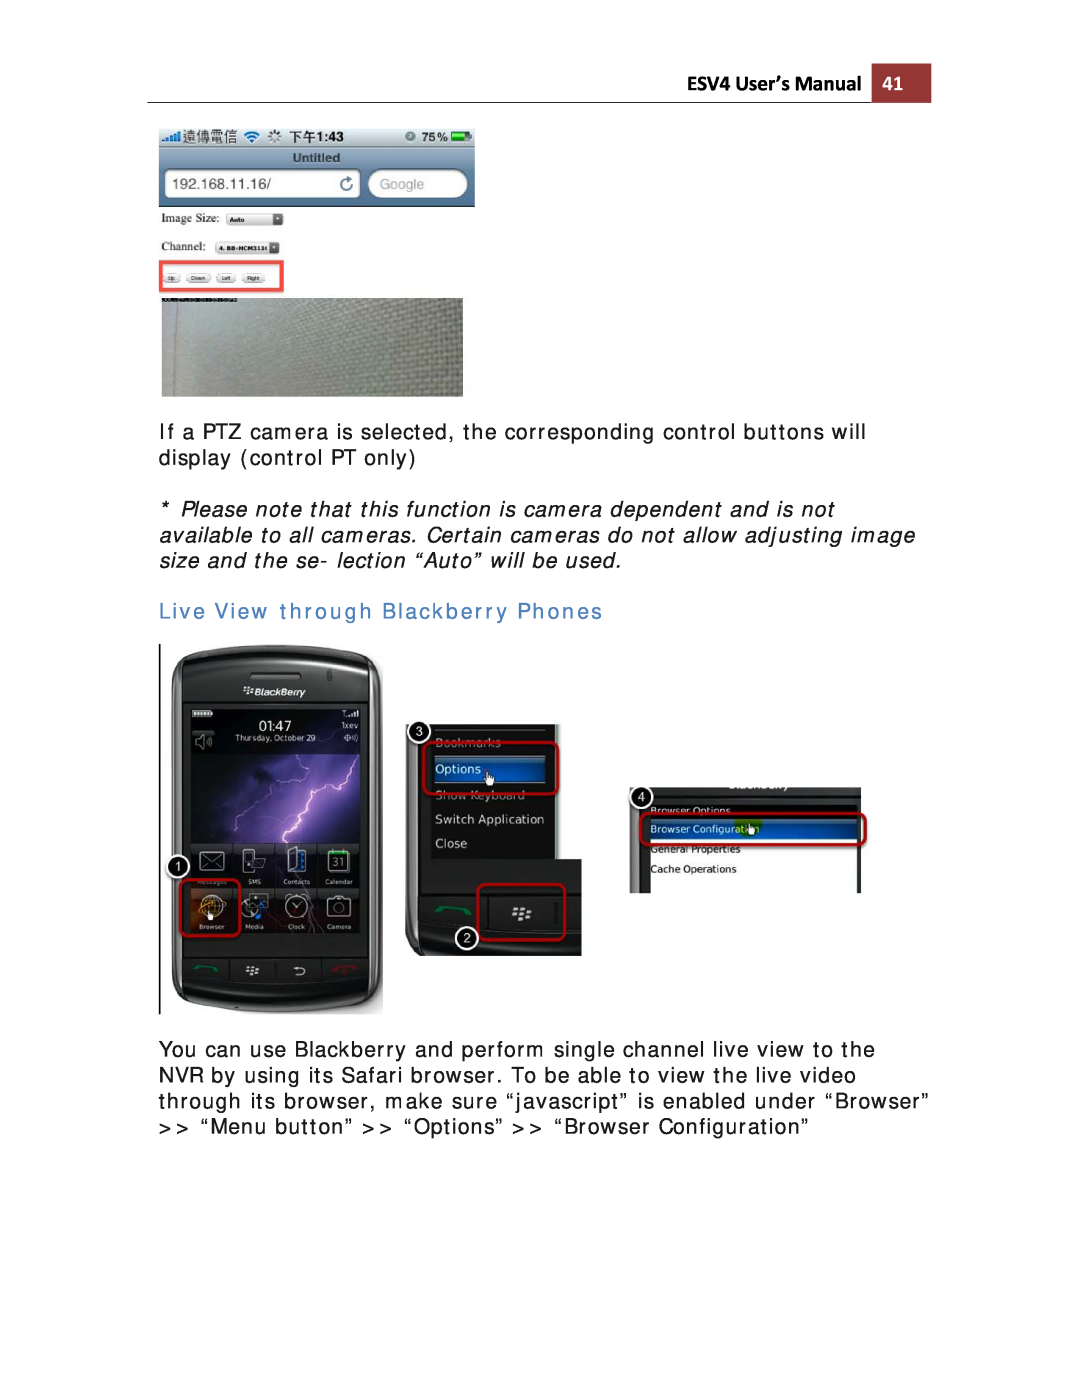 Toshiba ESV41T user manual Live View through Blackberry Phones, ESV4 User’s Manual 